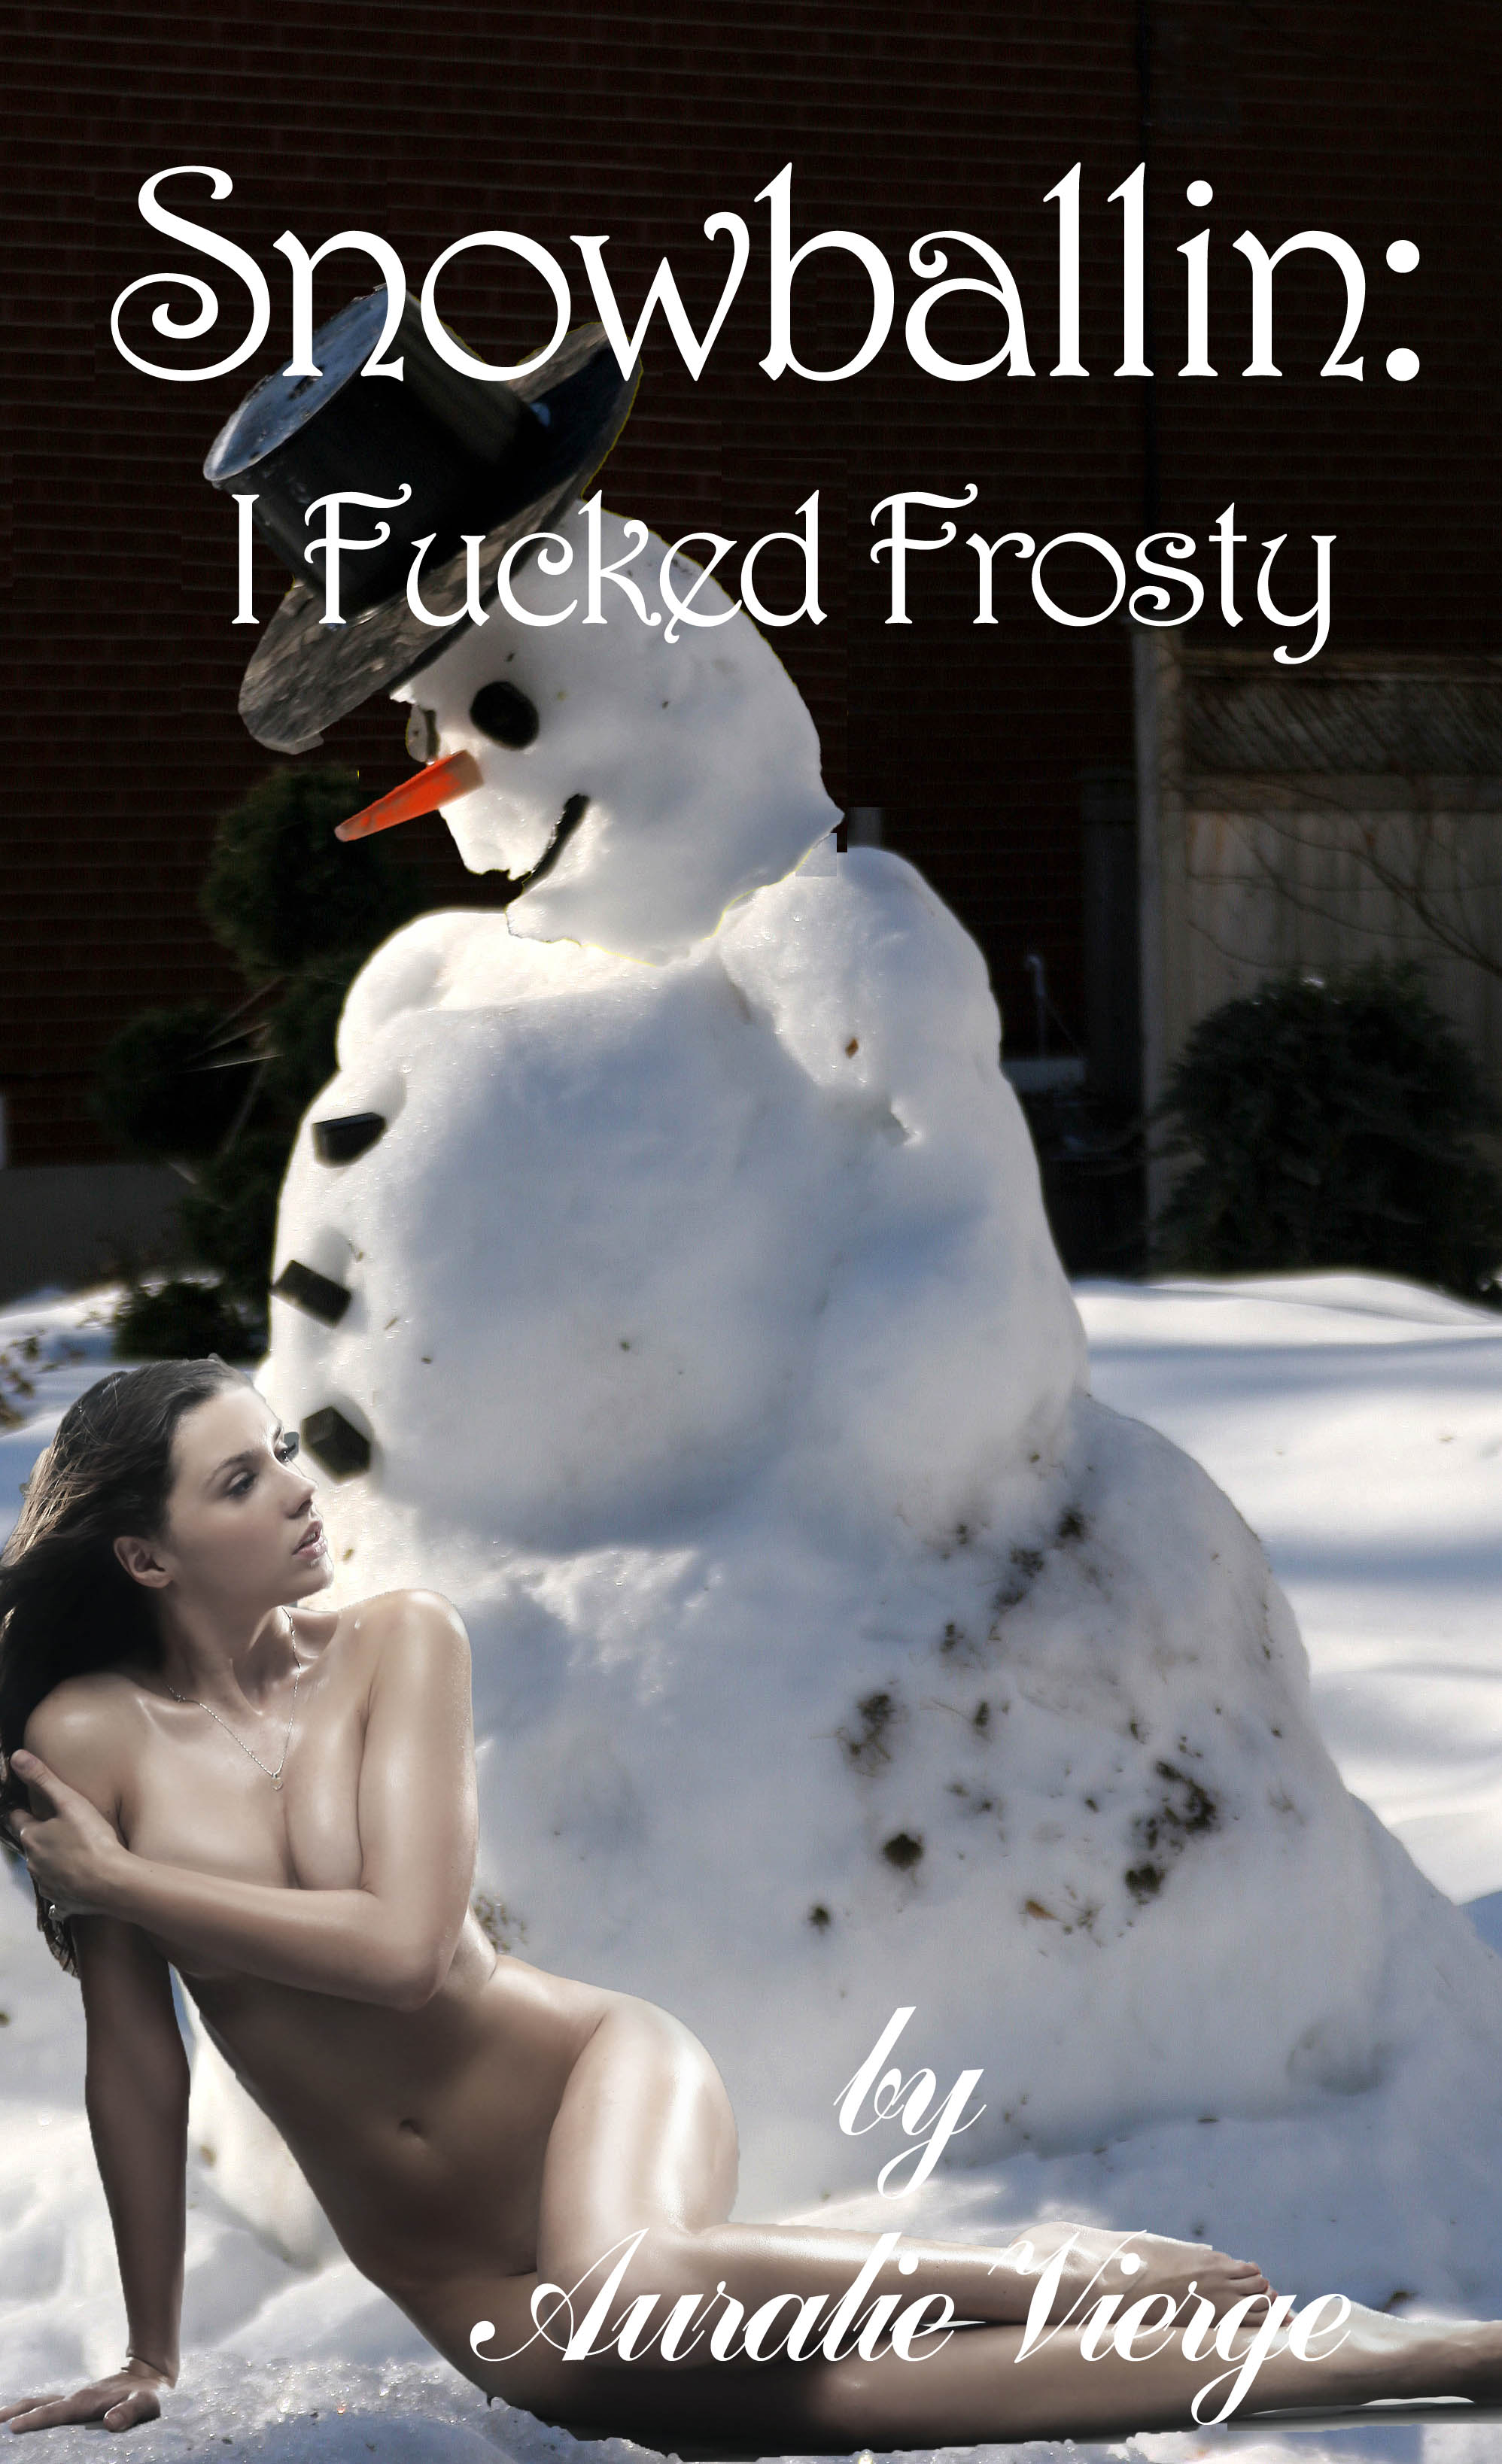 Frosty The Snowman Porn - Smashwords â€“ Snowballin': Fucked by Frosty â€“ a book by Auralie Vierge